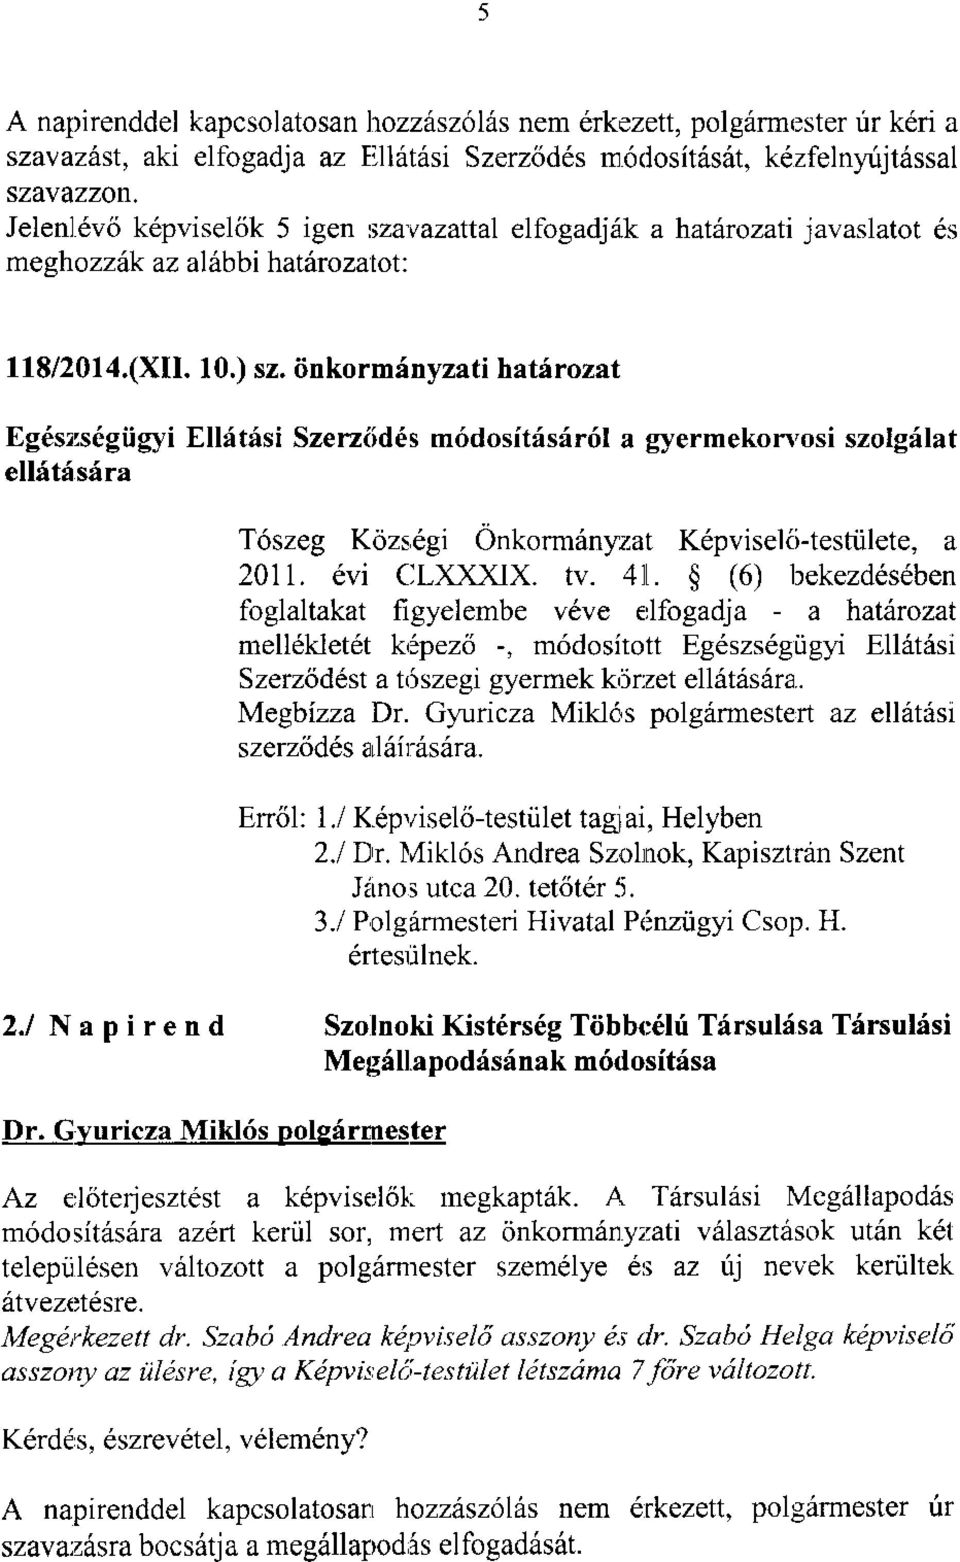 hatirozati javaslatot 6s meshozzik az al bbi hatdrozatot: 118/2014.(XII. 10.) sz.